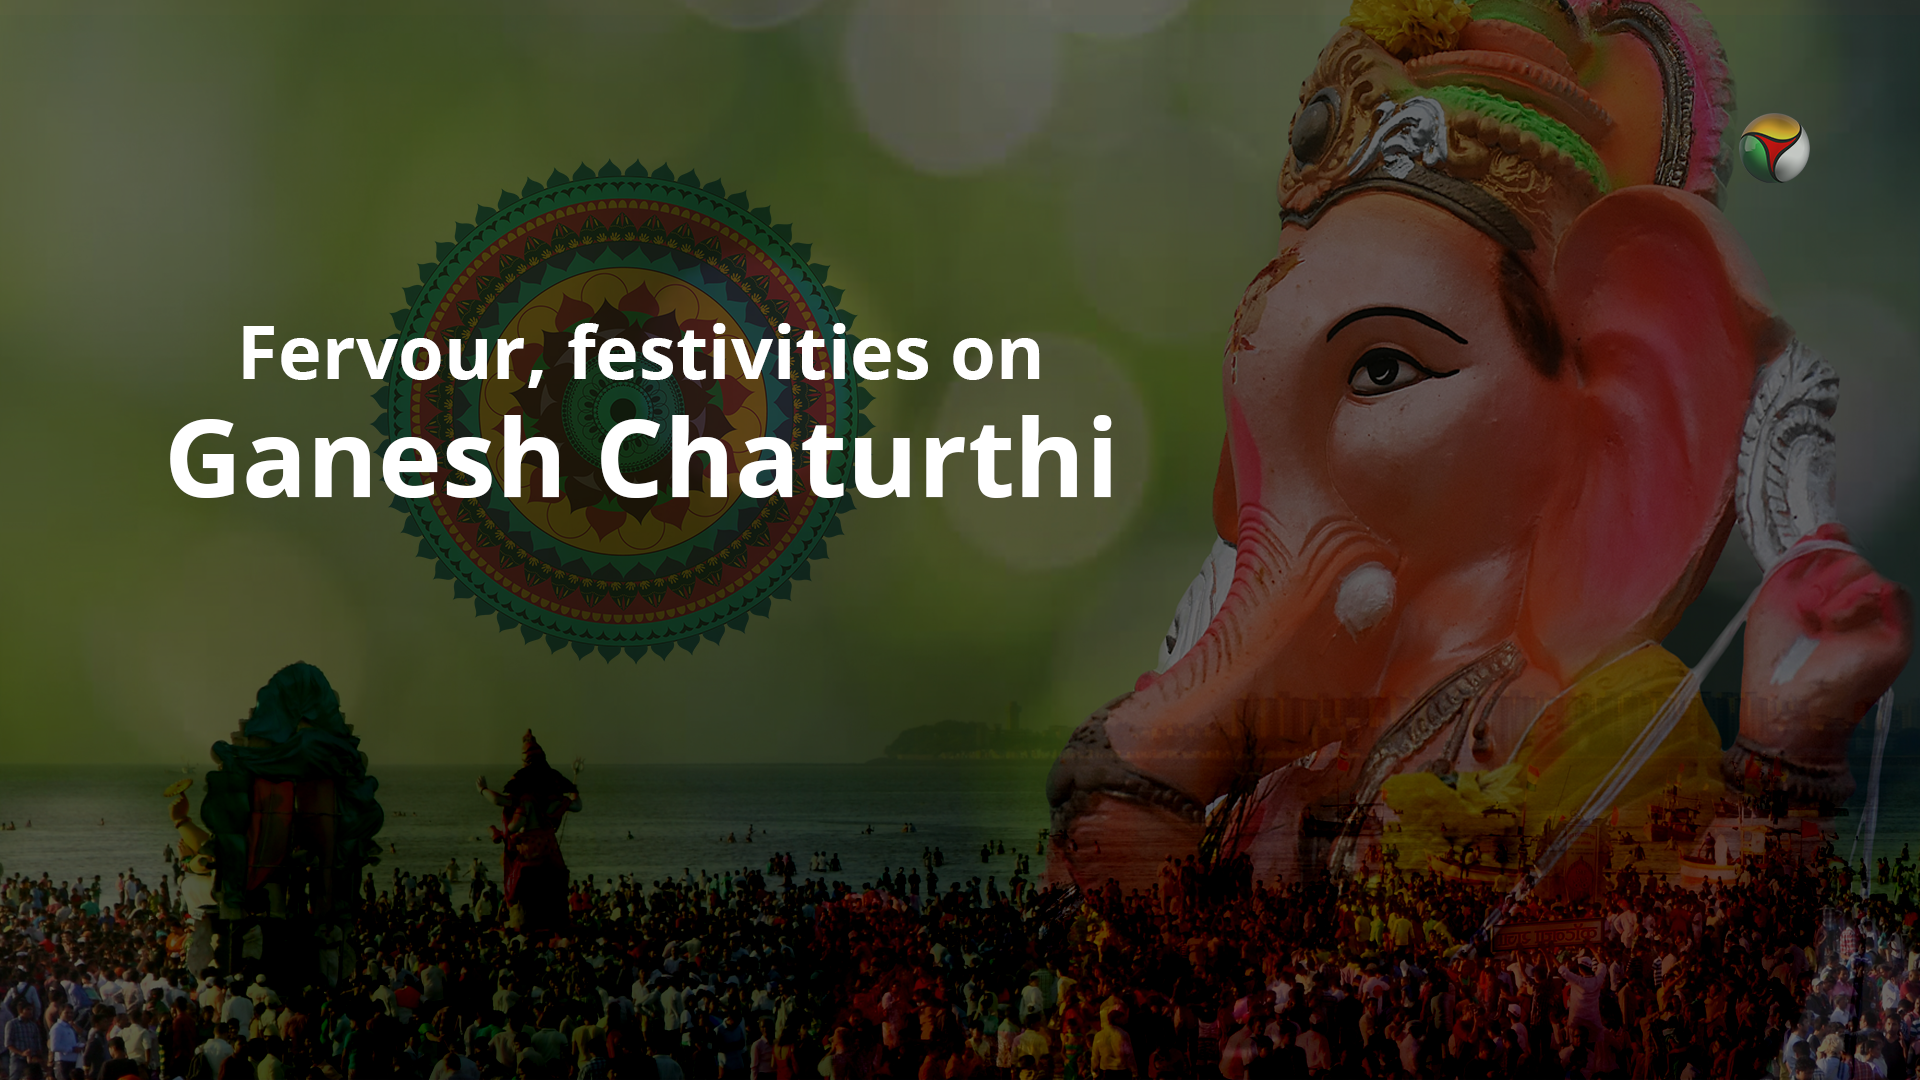 Fervour, festivities on Ganesh Chaturthi